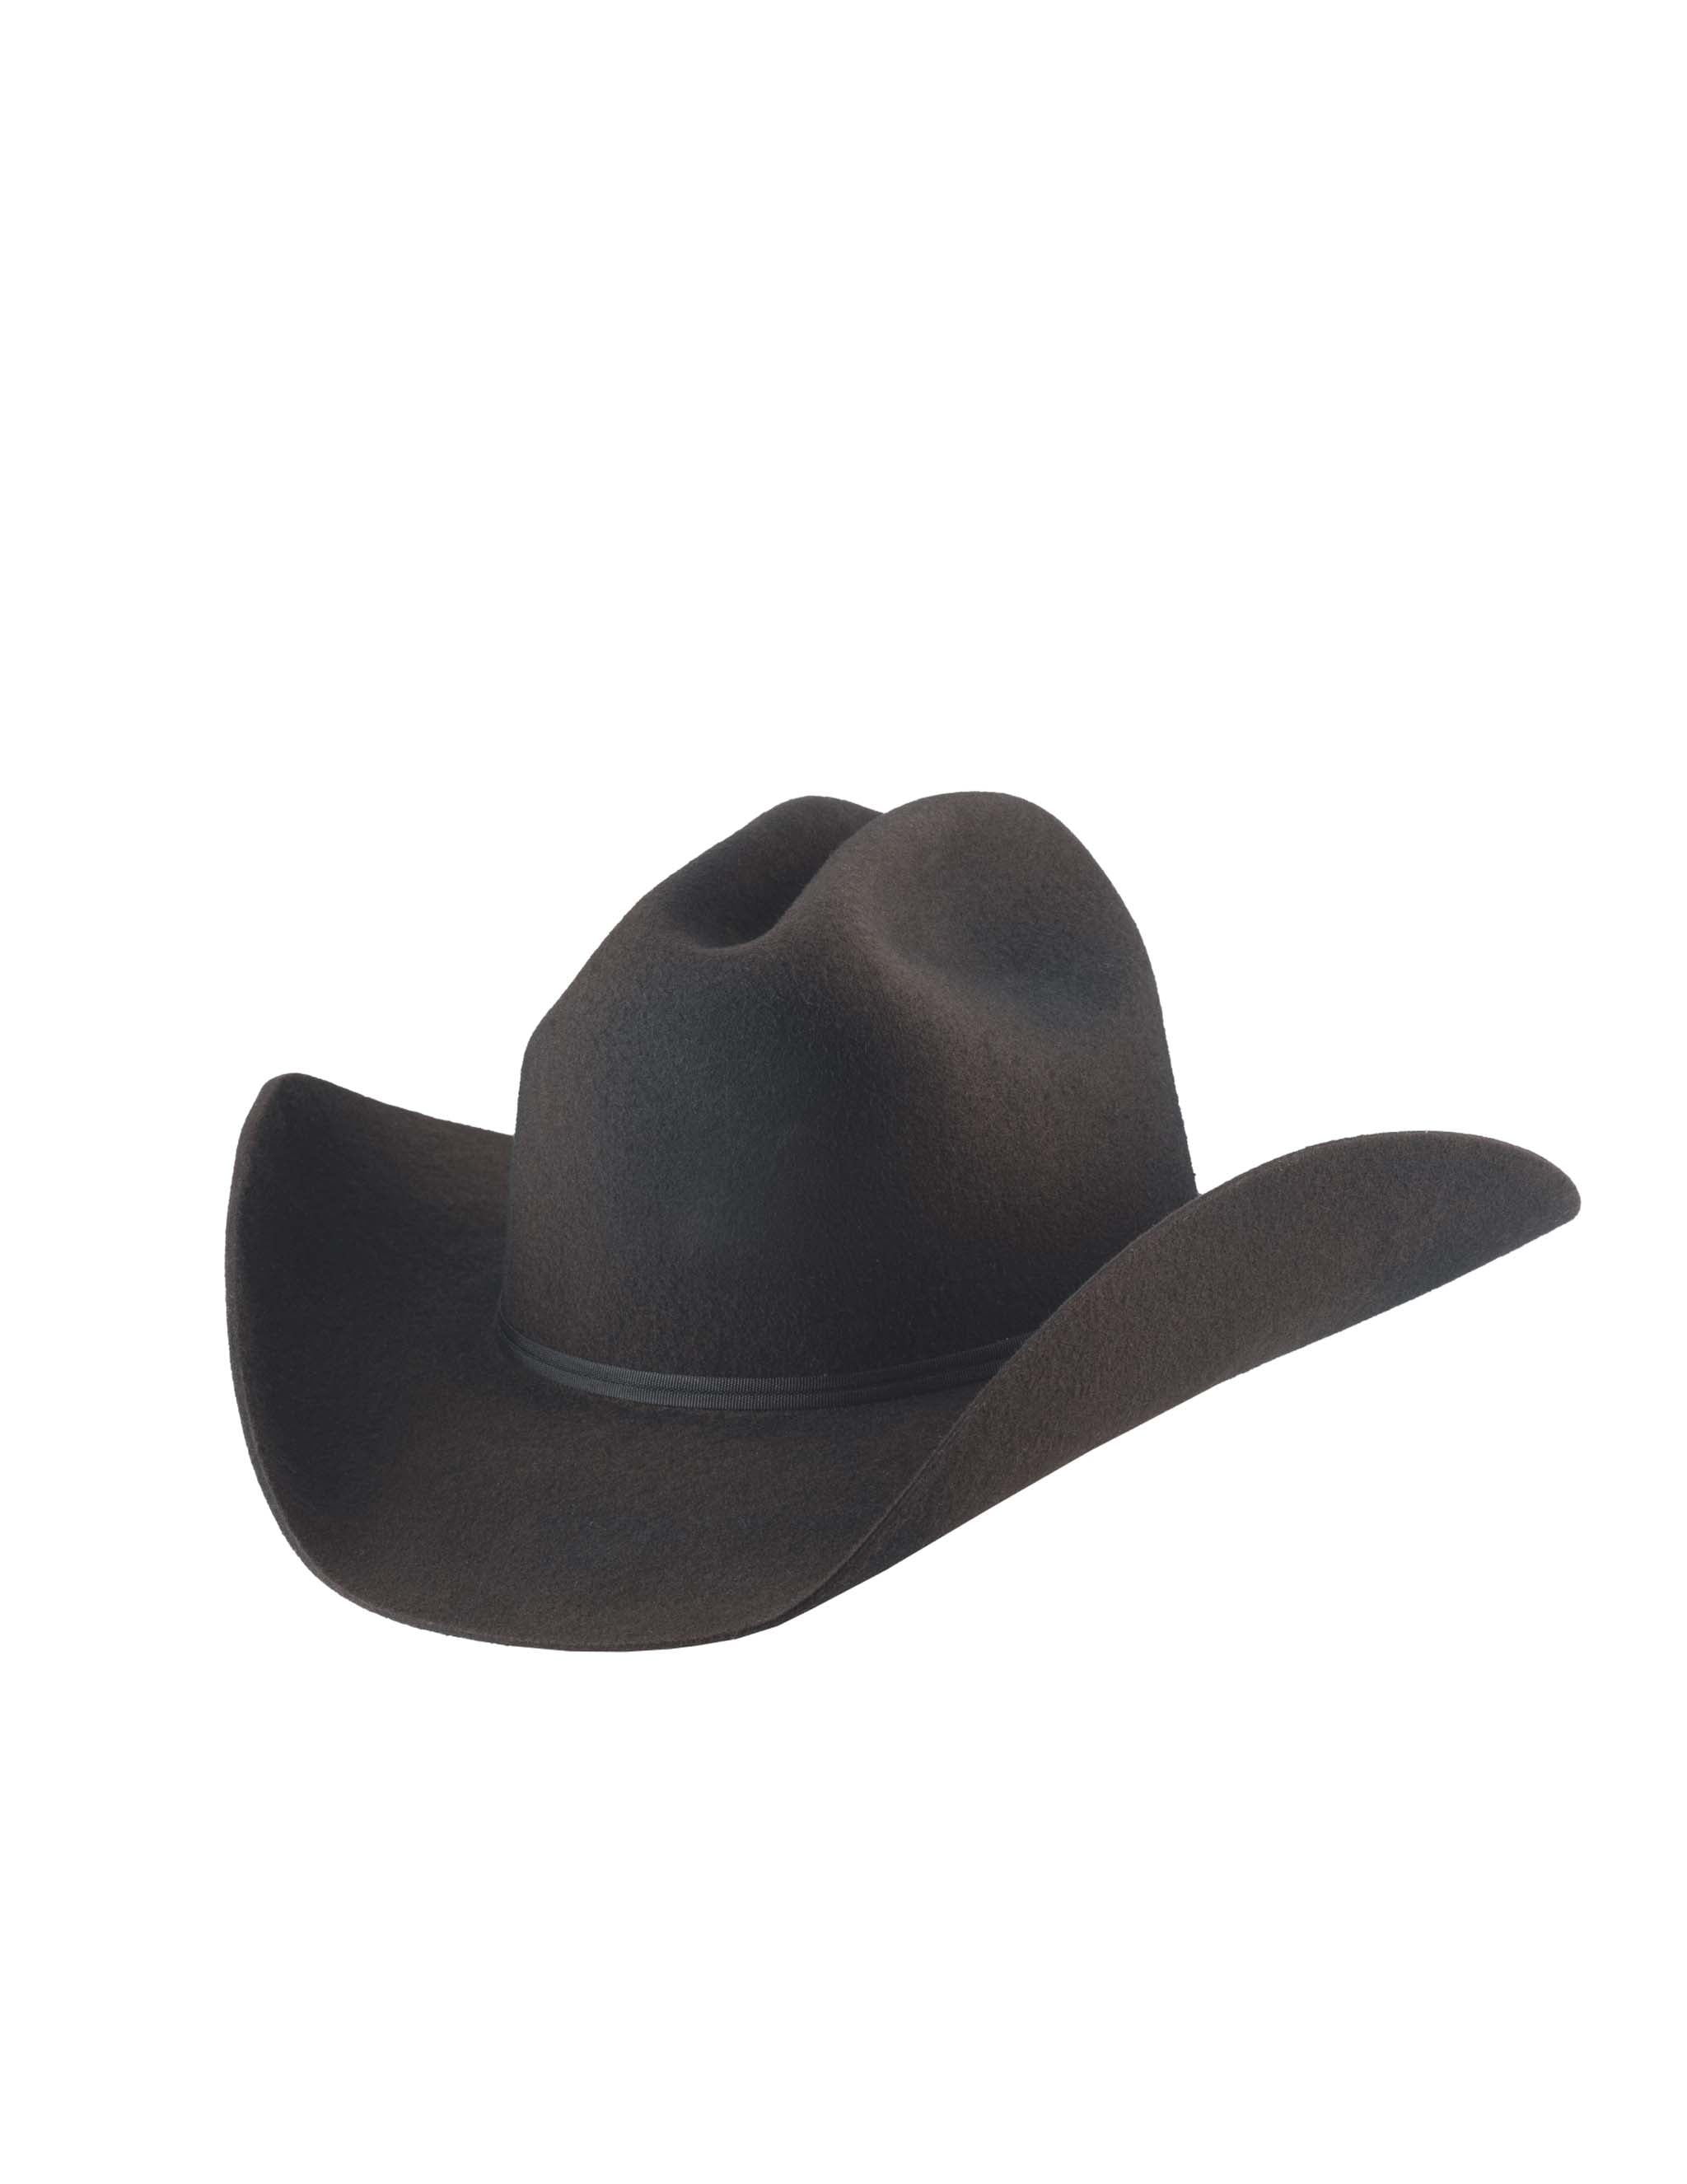 Montana Ranch Cowboy Hat By Bullhide